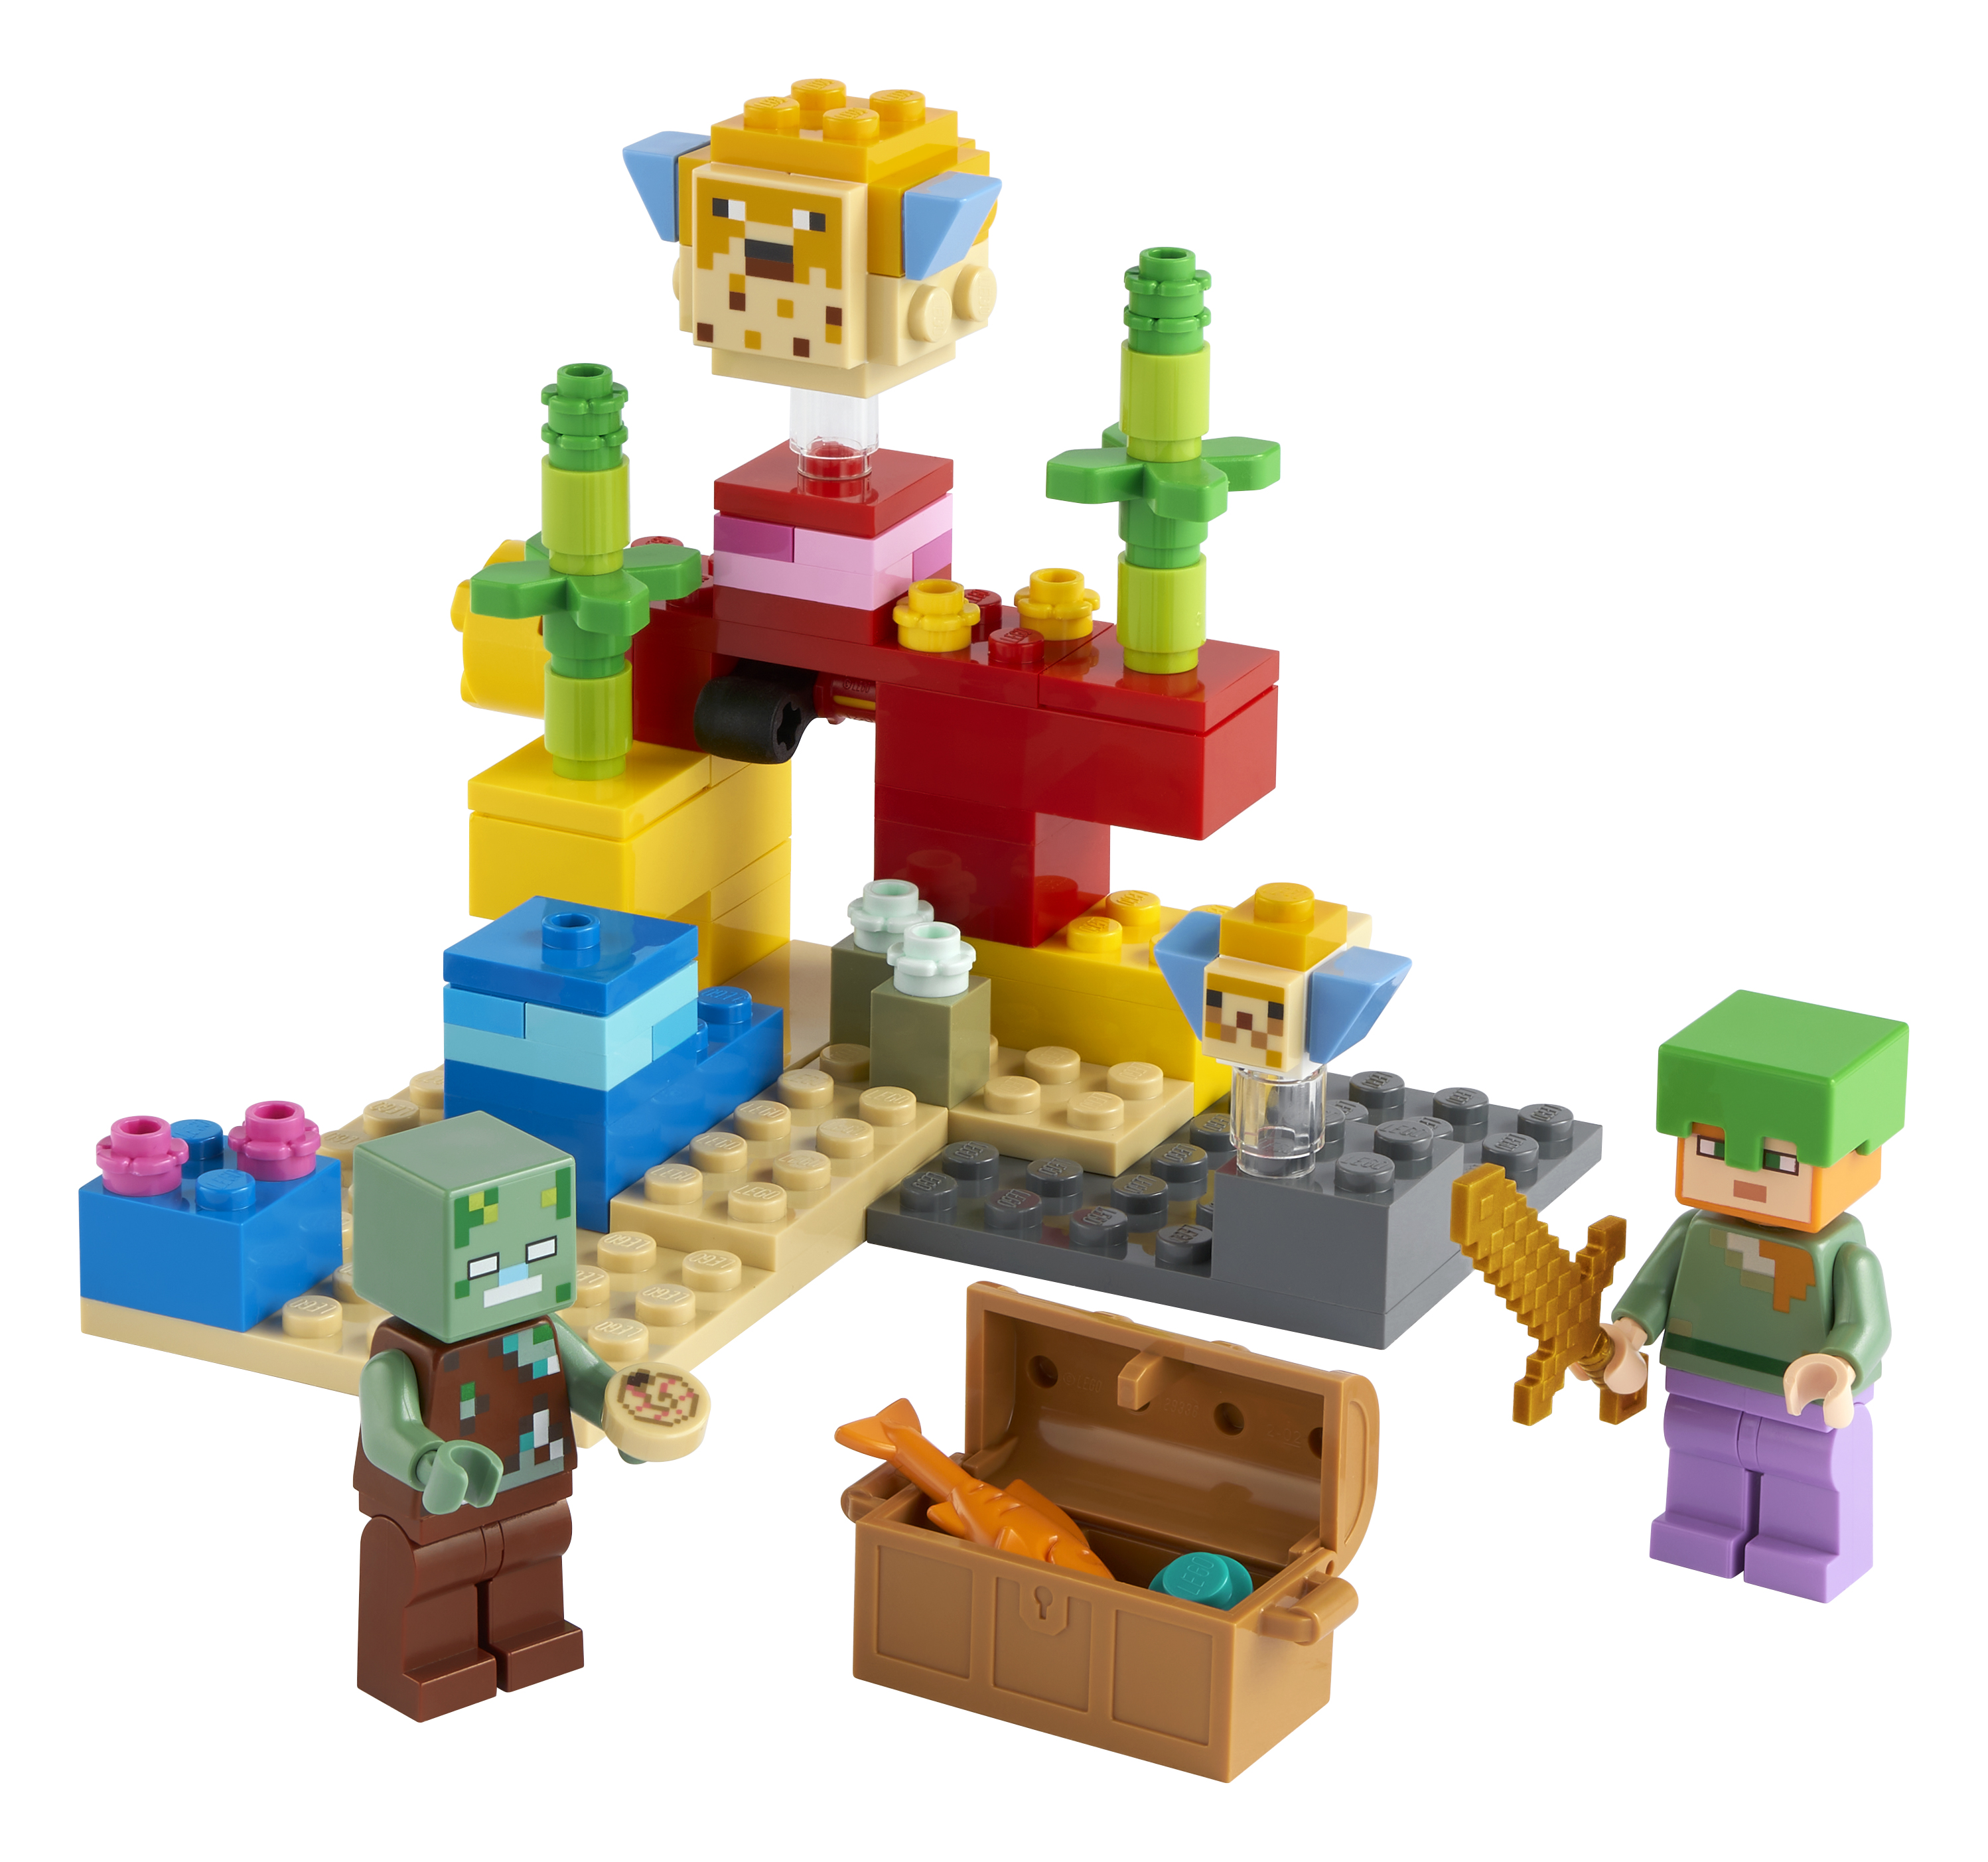 Produkt miniatyrebild LEGO® Minecraft™ 21164 Korallrevet